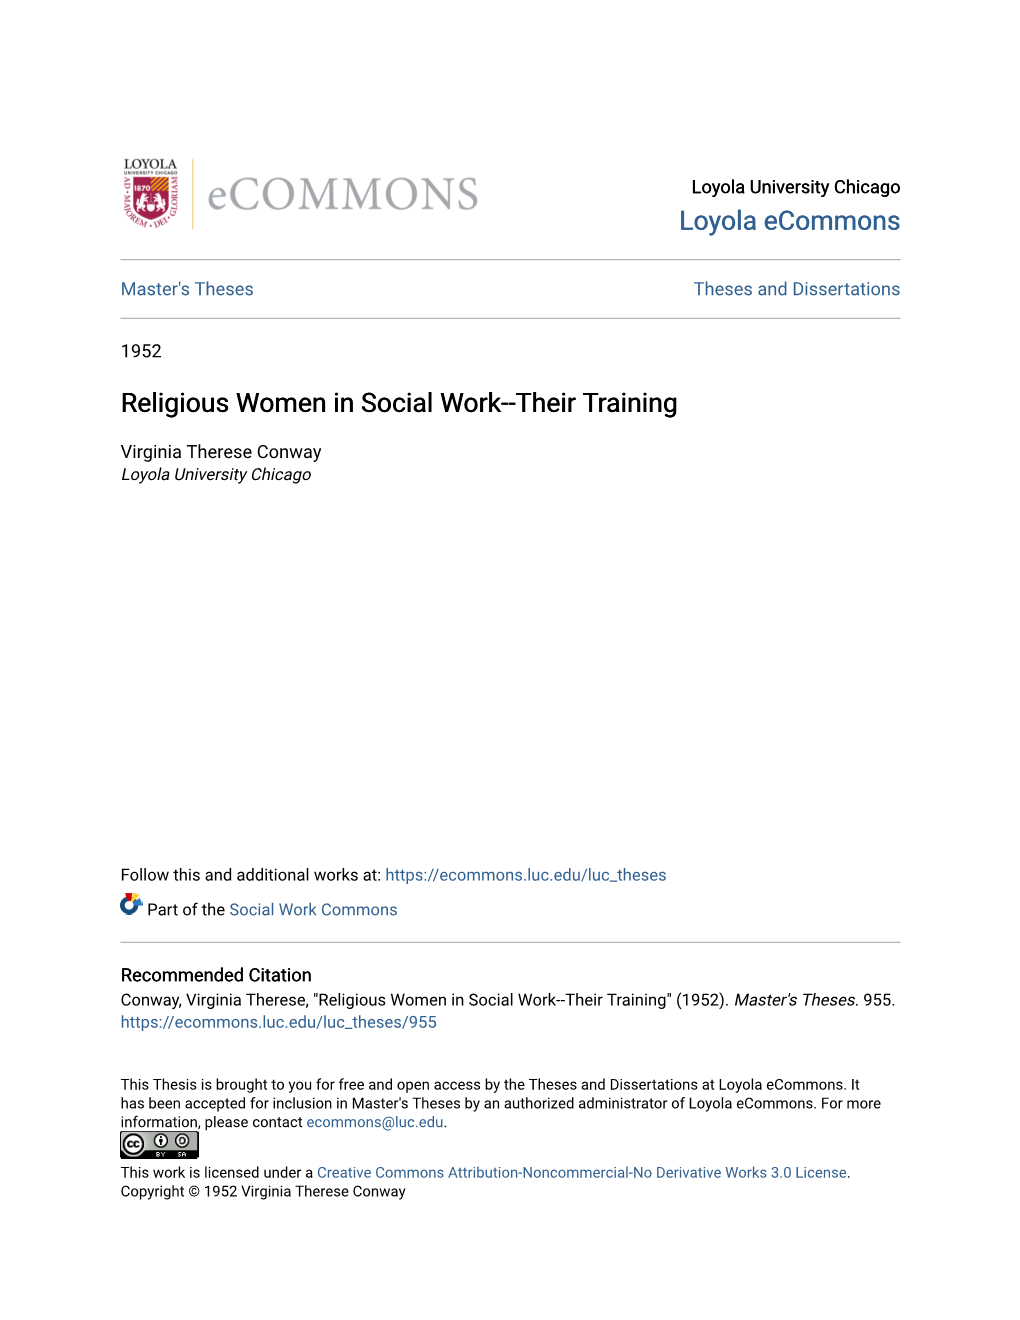 Religious Women in Social Work--Their Training